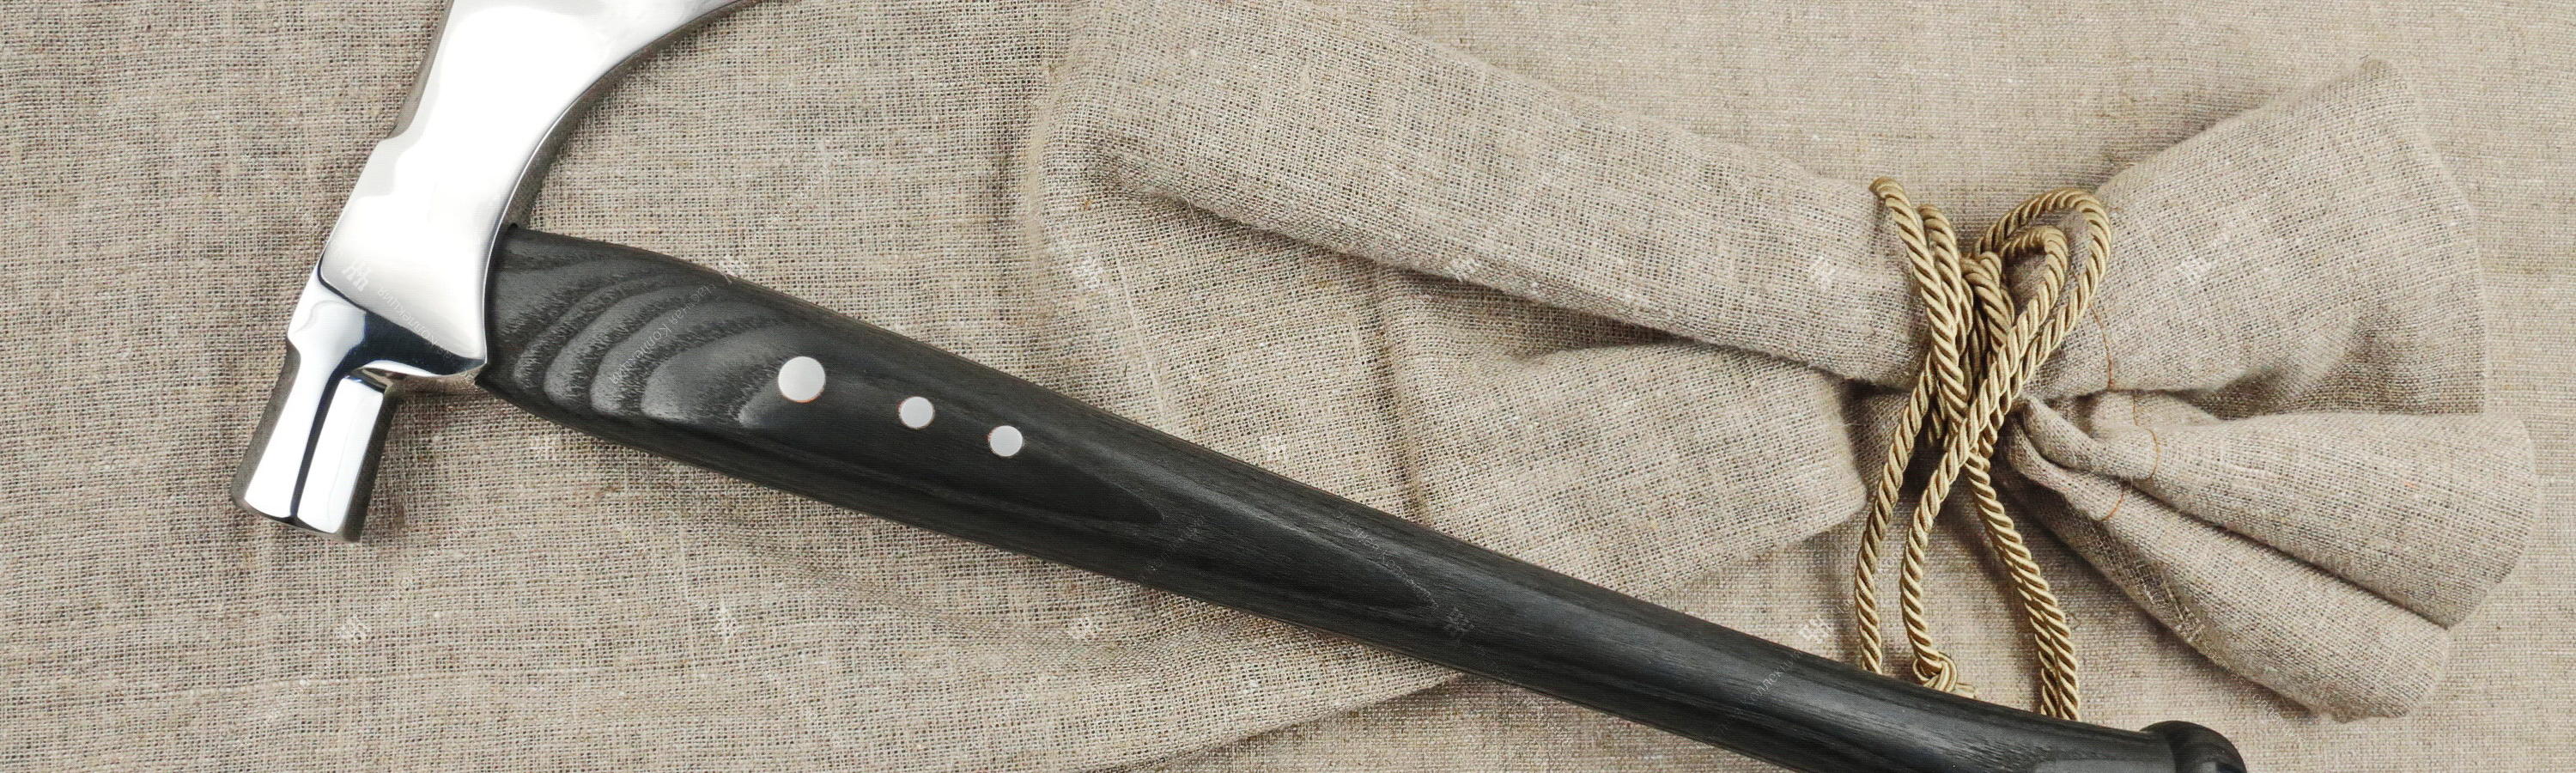 vintage axe